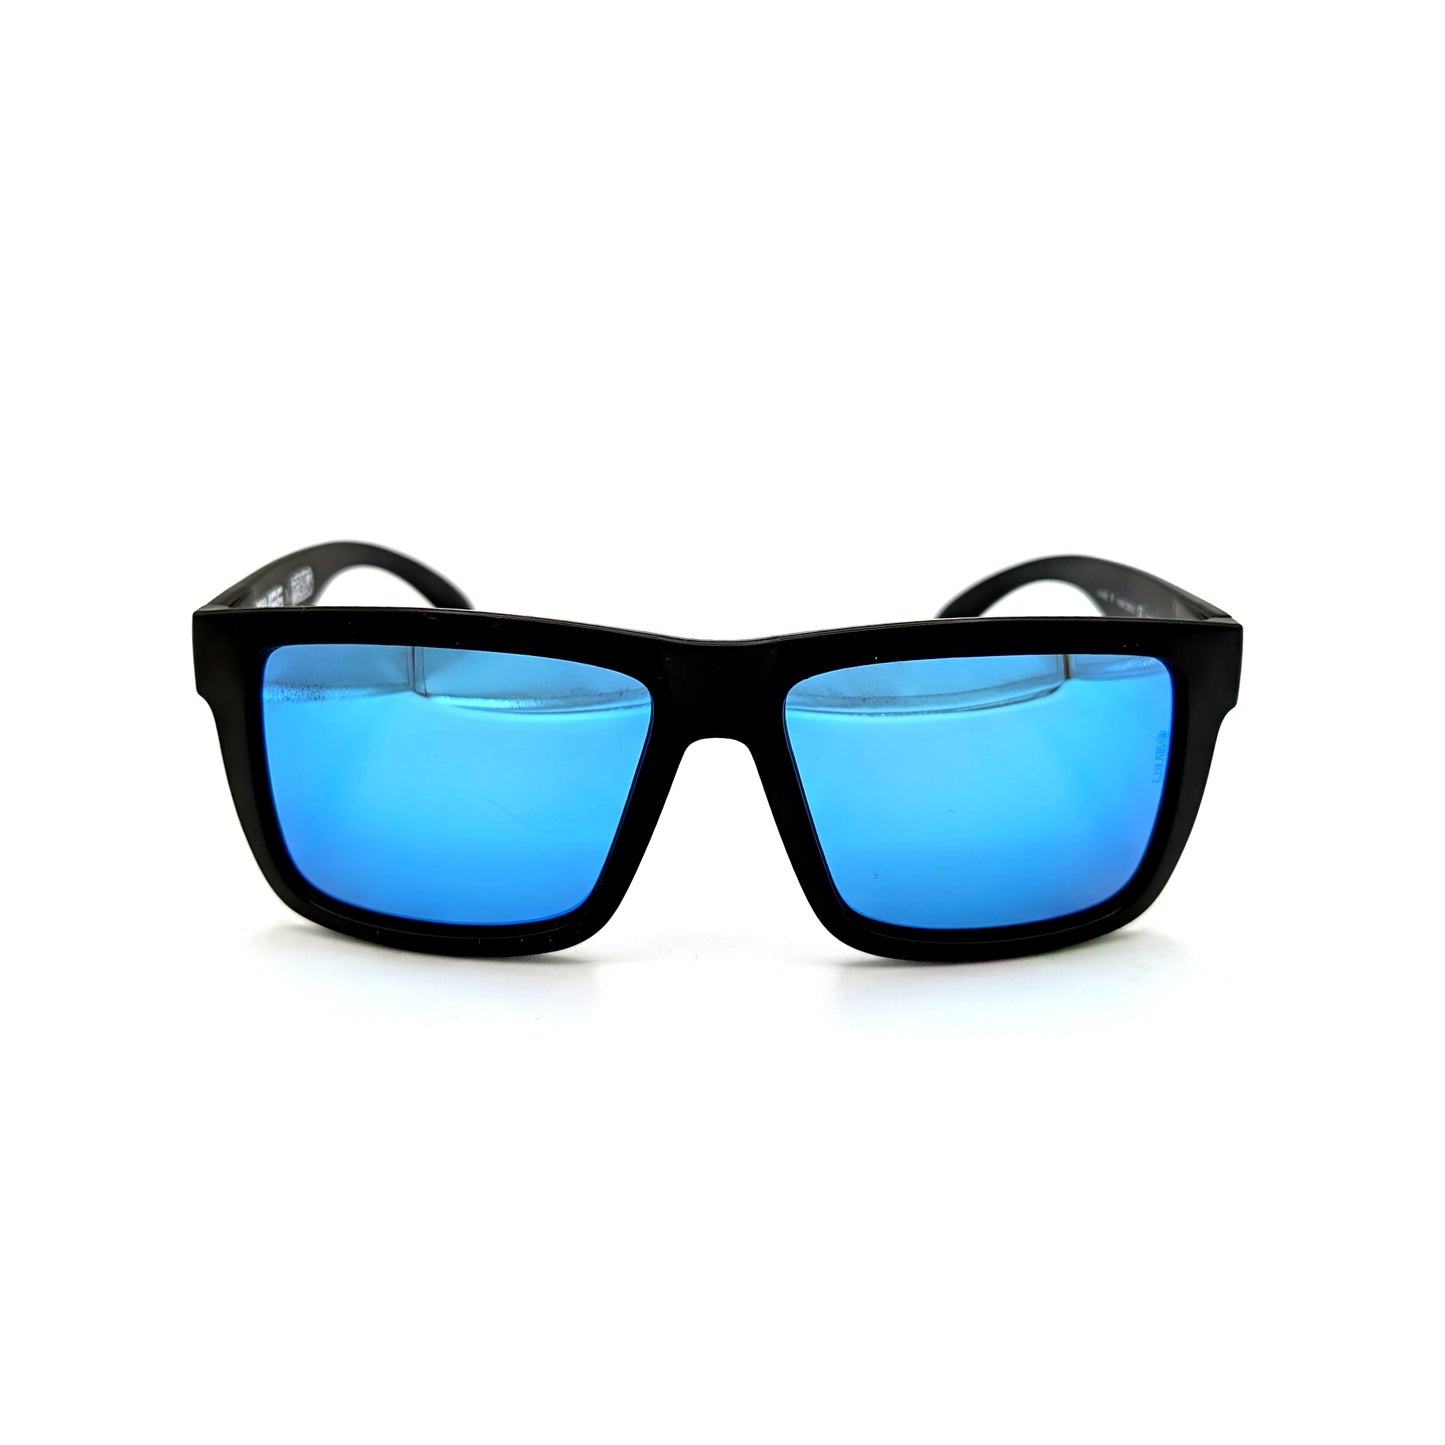 VGG Heatwave Sunglasses